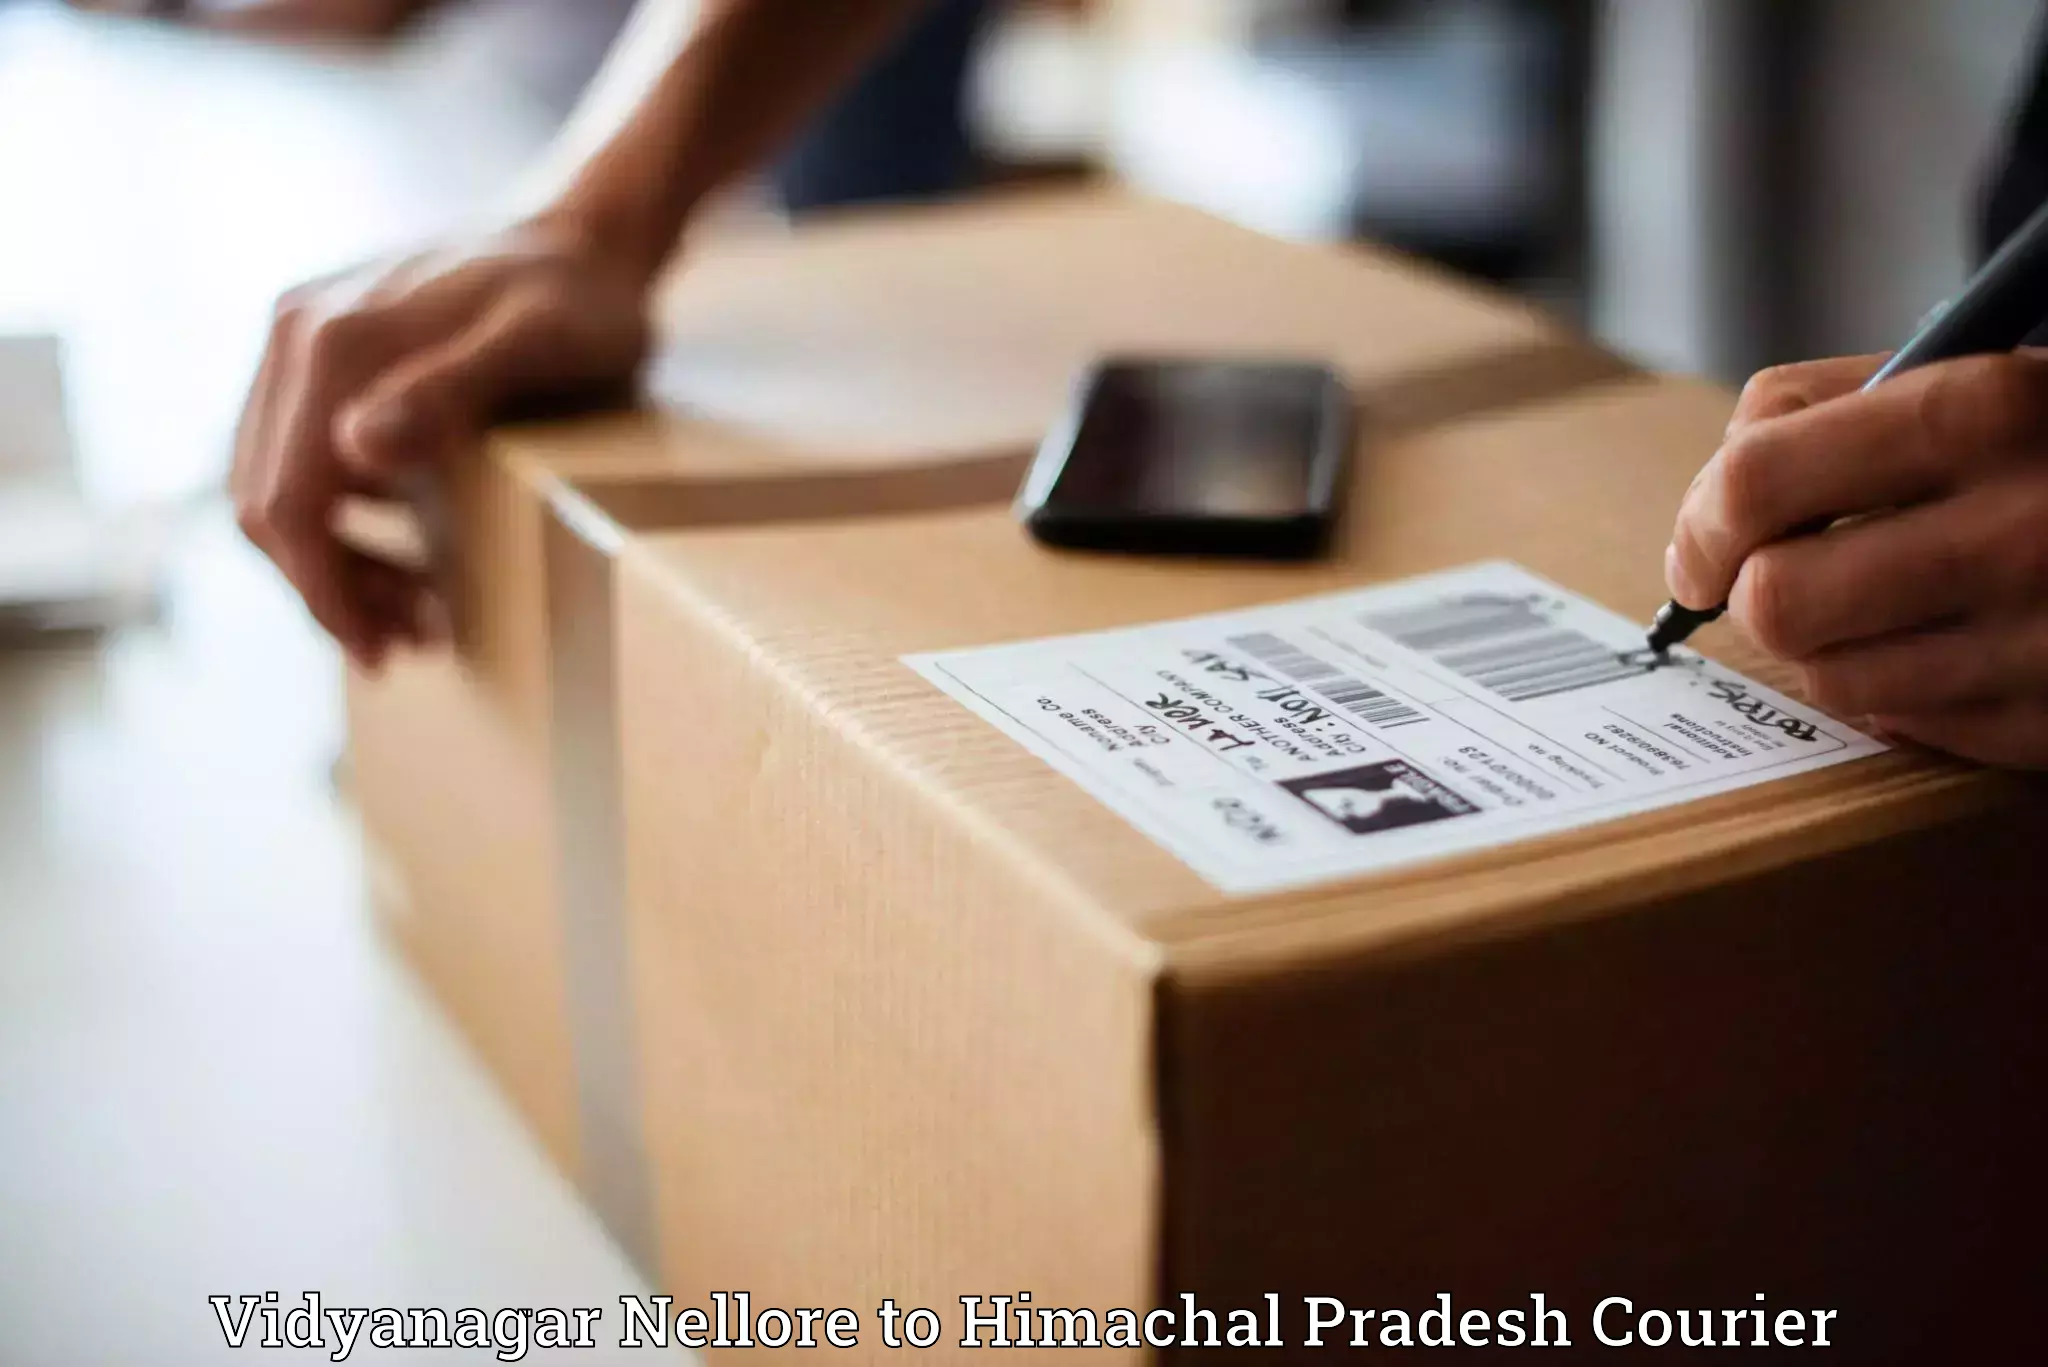 Cash on delivery service in Vidyanagar Nellore to Himachal Pradesh